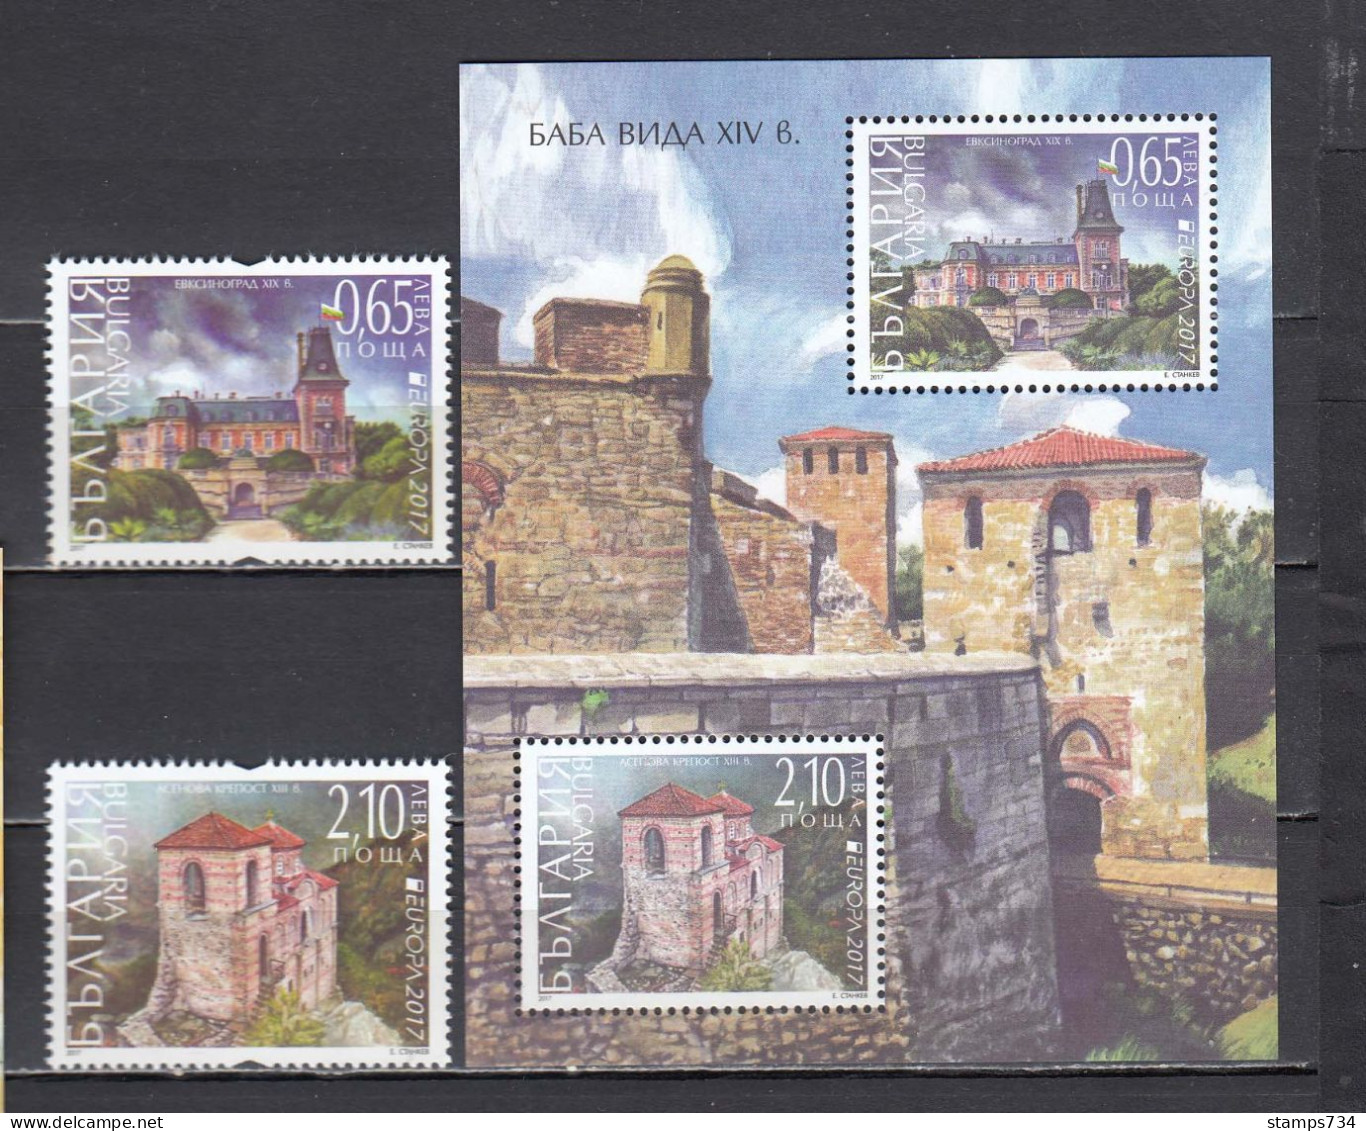 Bulgaria 2017 - Europe: Castles And Palaces, Mi-Nr. 5308/09+Block 431, MNH** - Neufs